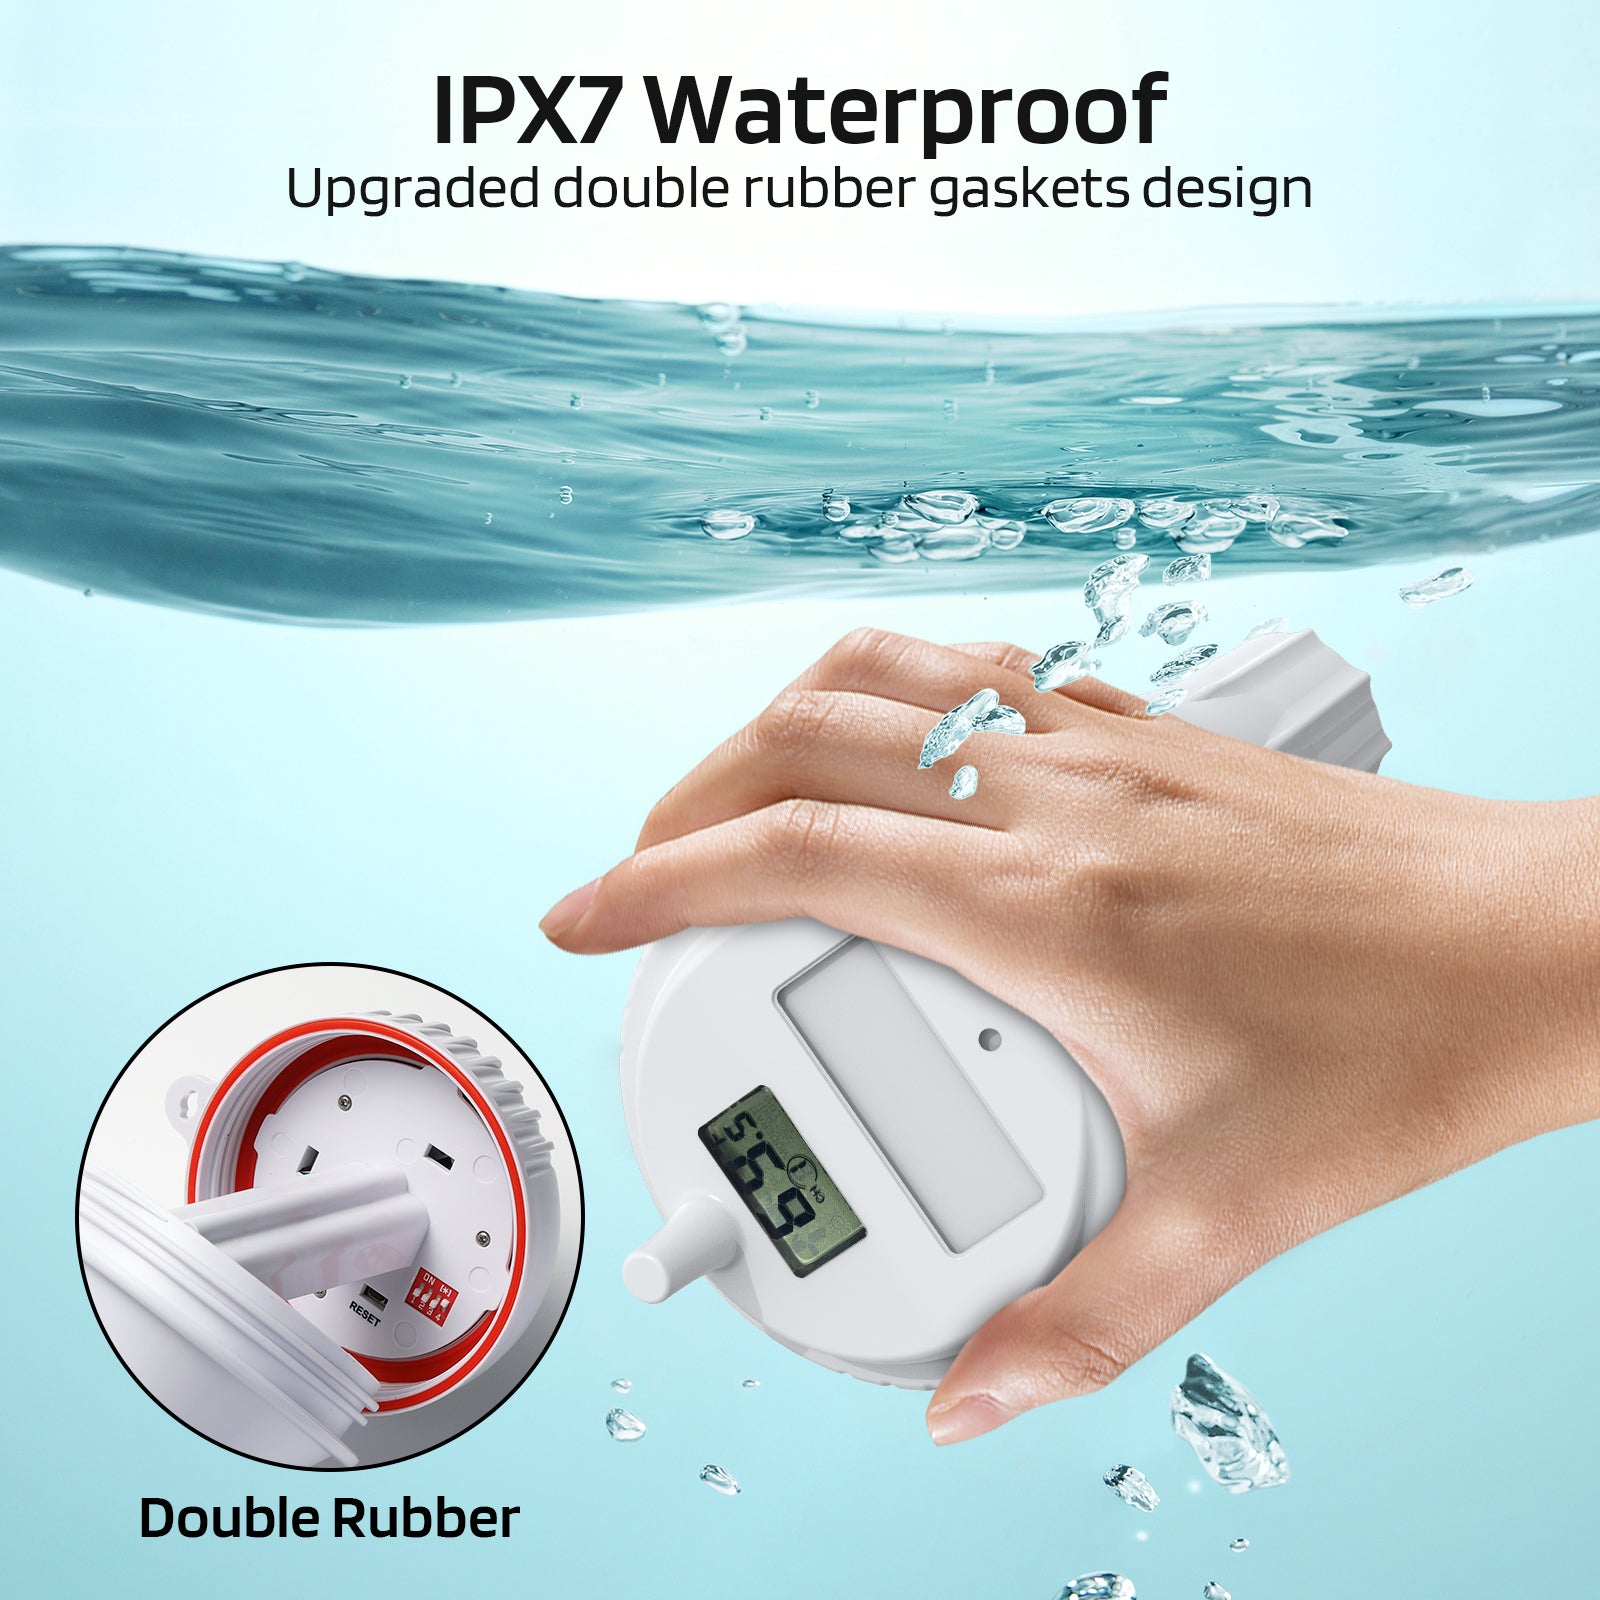 INKBIRD 433Mhz Wireless Temperature Sensor Waterproof Bluetooth